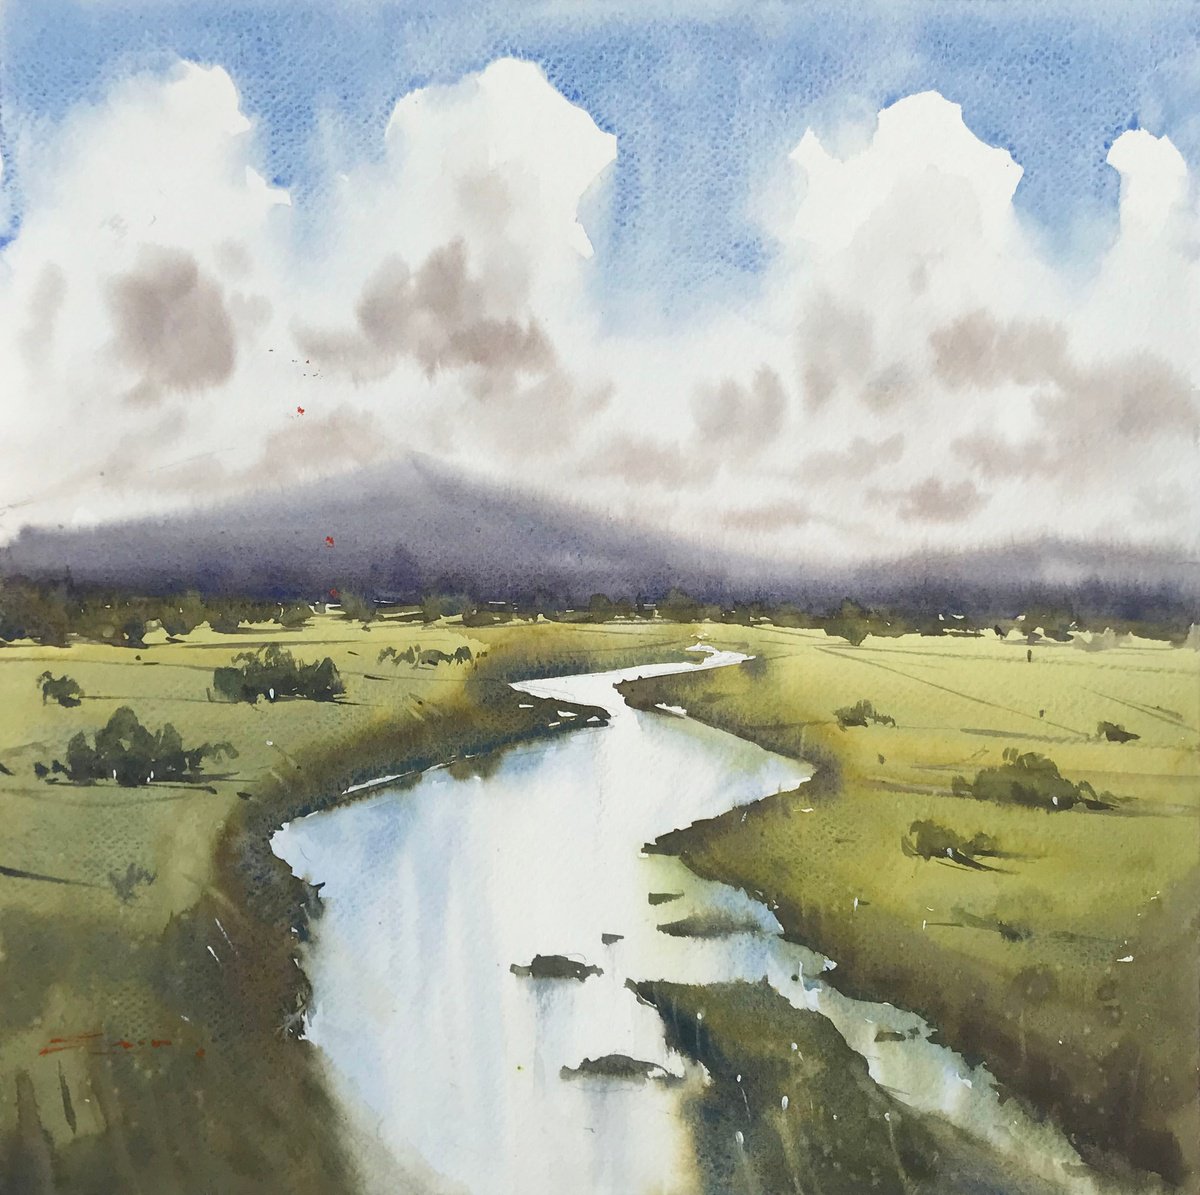 River across the Green Meadow by Swarup Dandapat